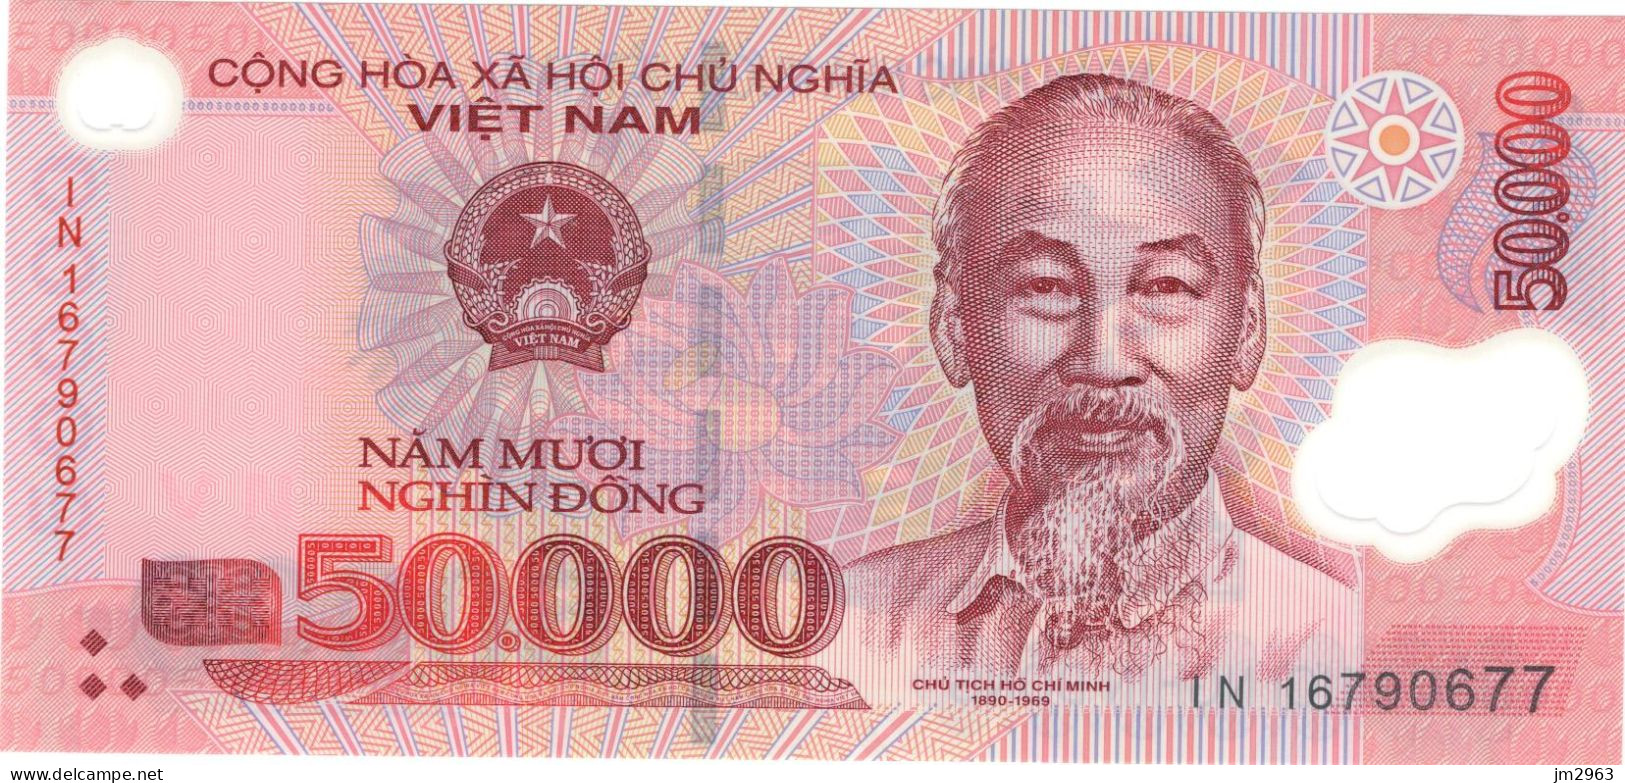 VIET NAM 50.000 DONG UNC ND IN 16790677 - Vietnam